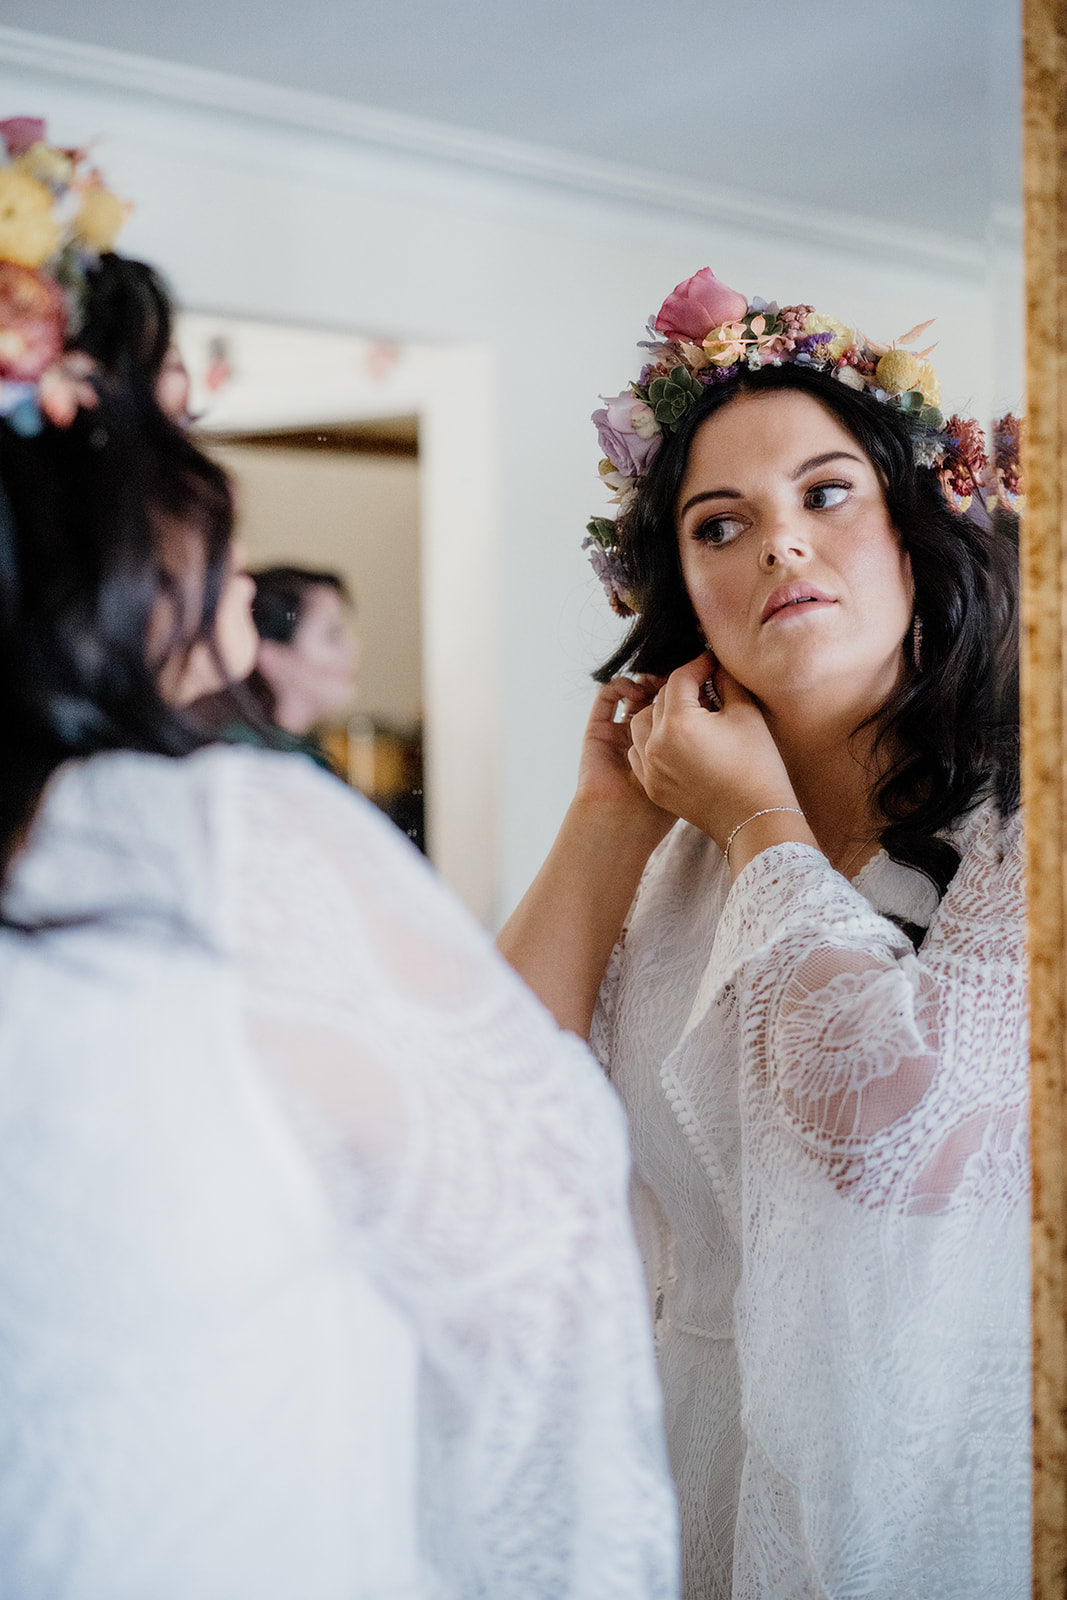 Bride getting ready photo. Jillian Franklin Couture wedding dress. Lace bridal dress by Jillian Franklin, Albury.